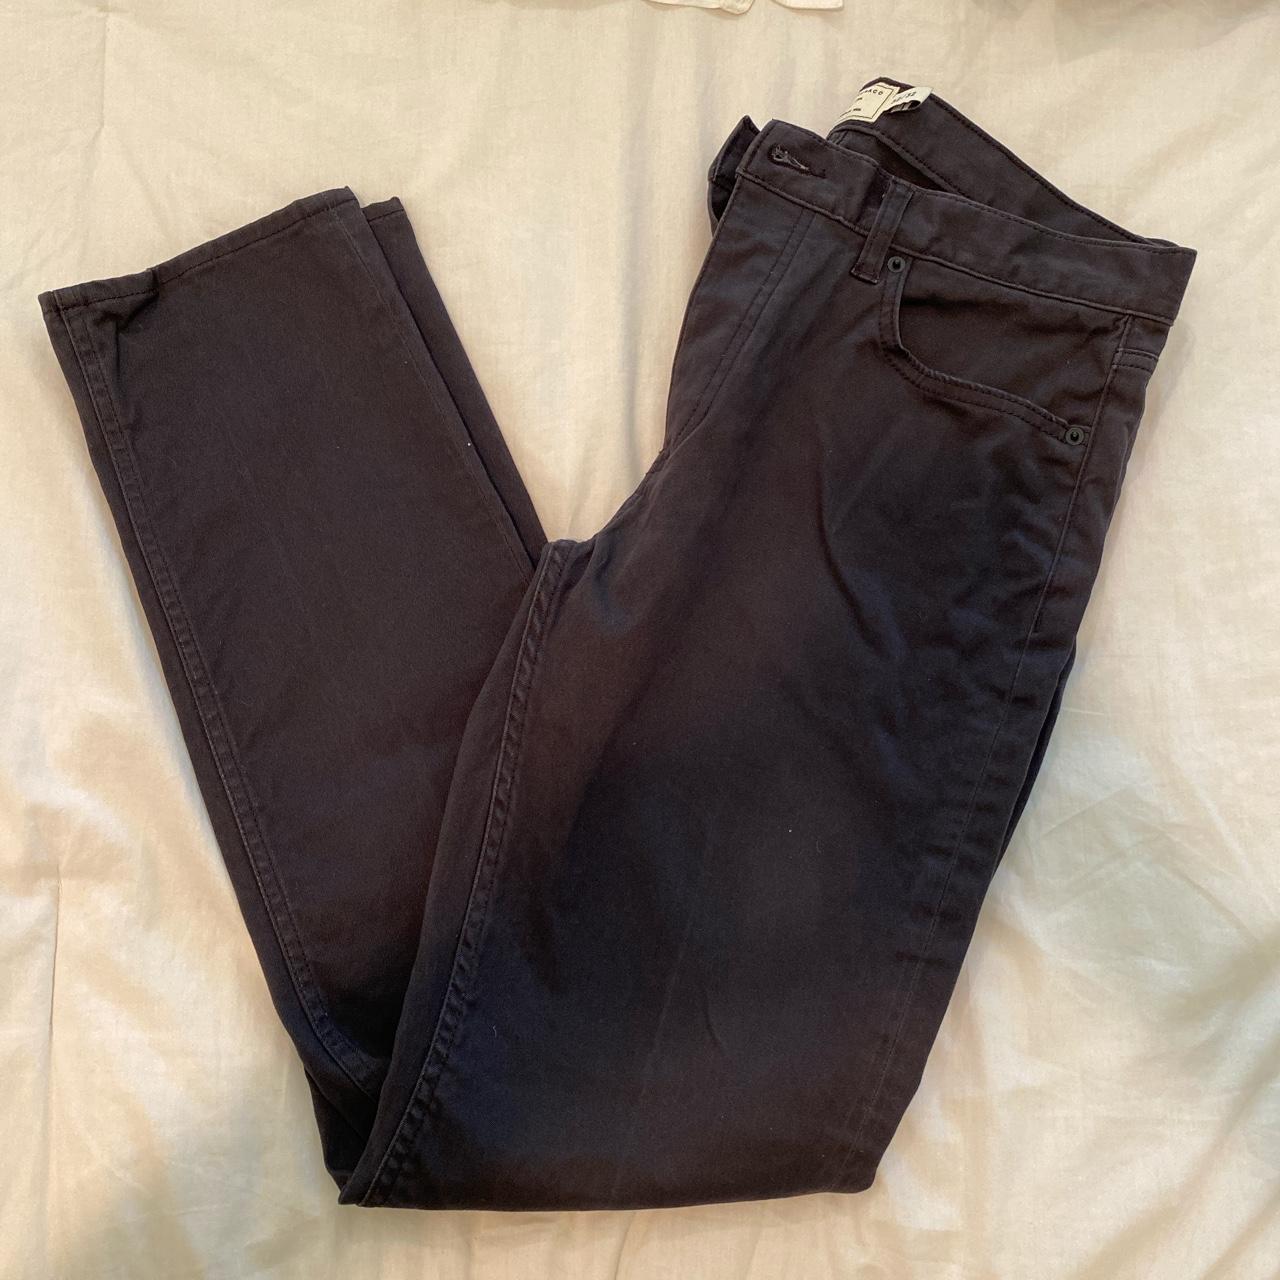 Club monaco black men’s pants size 32 - Depop